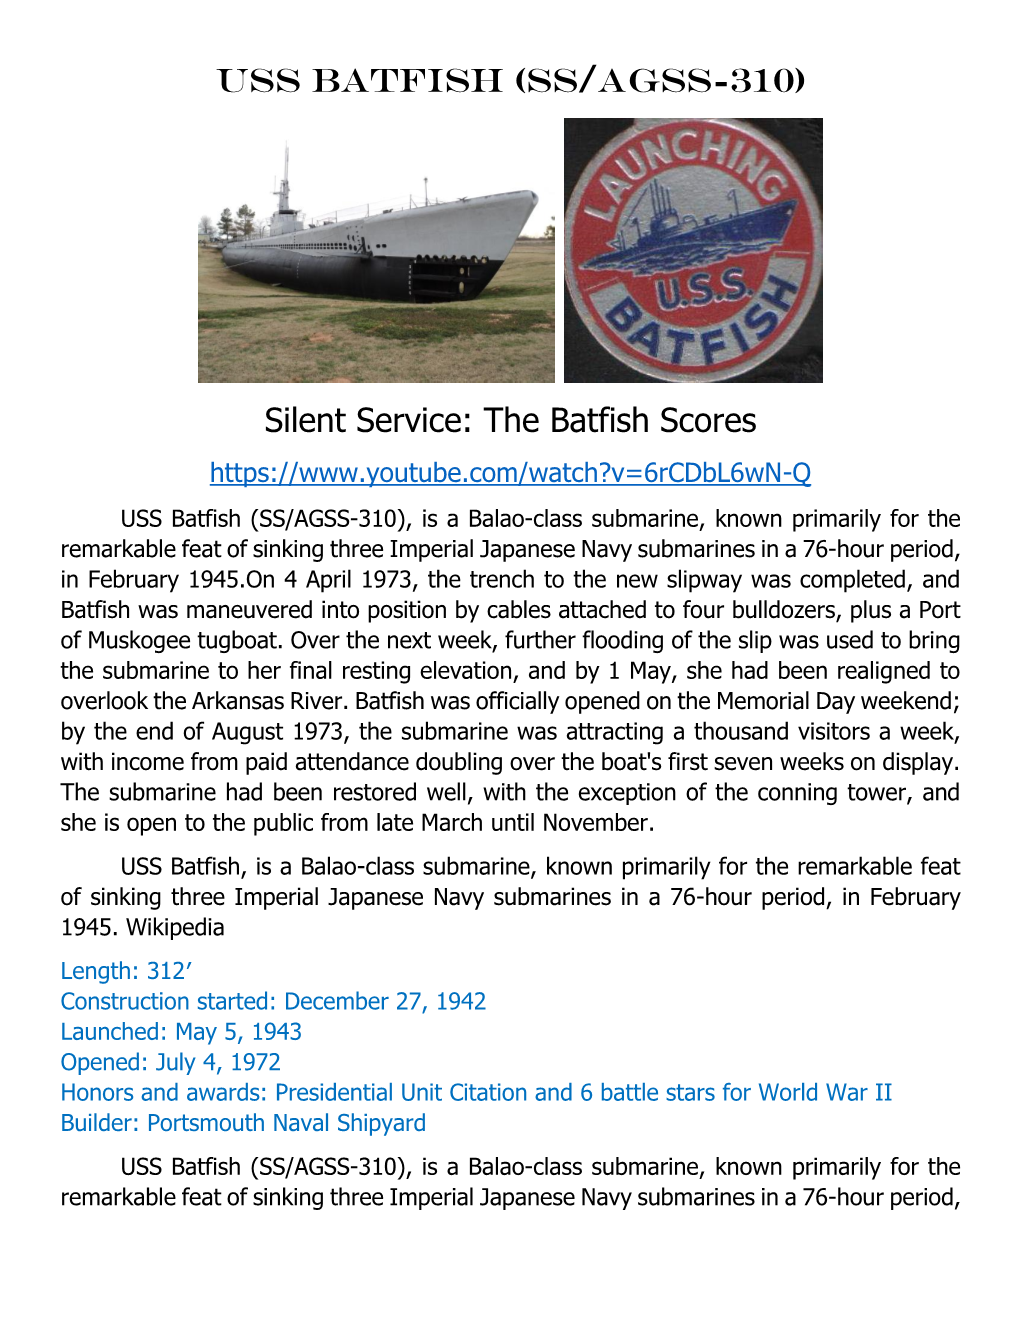 USS Batfish (SS/AGSS-310) Silent Service: the Batfish Scores